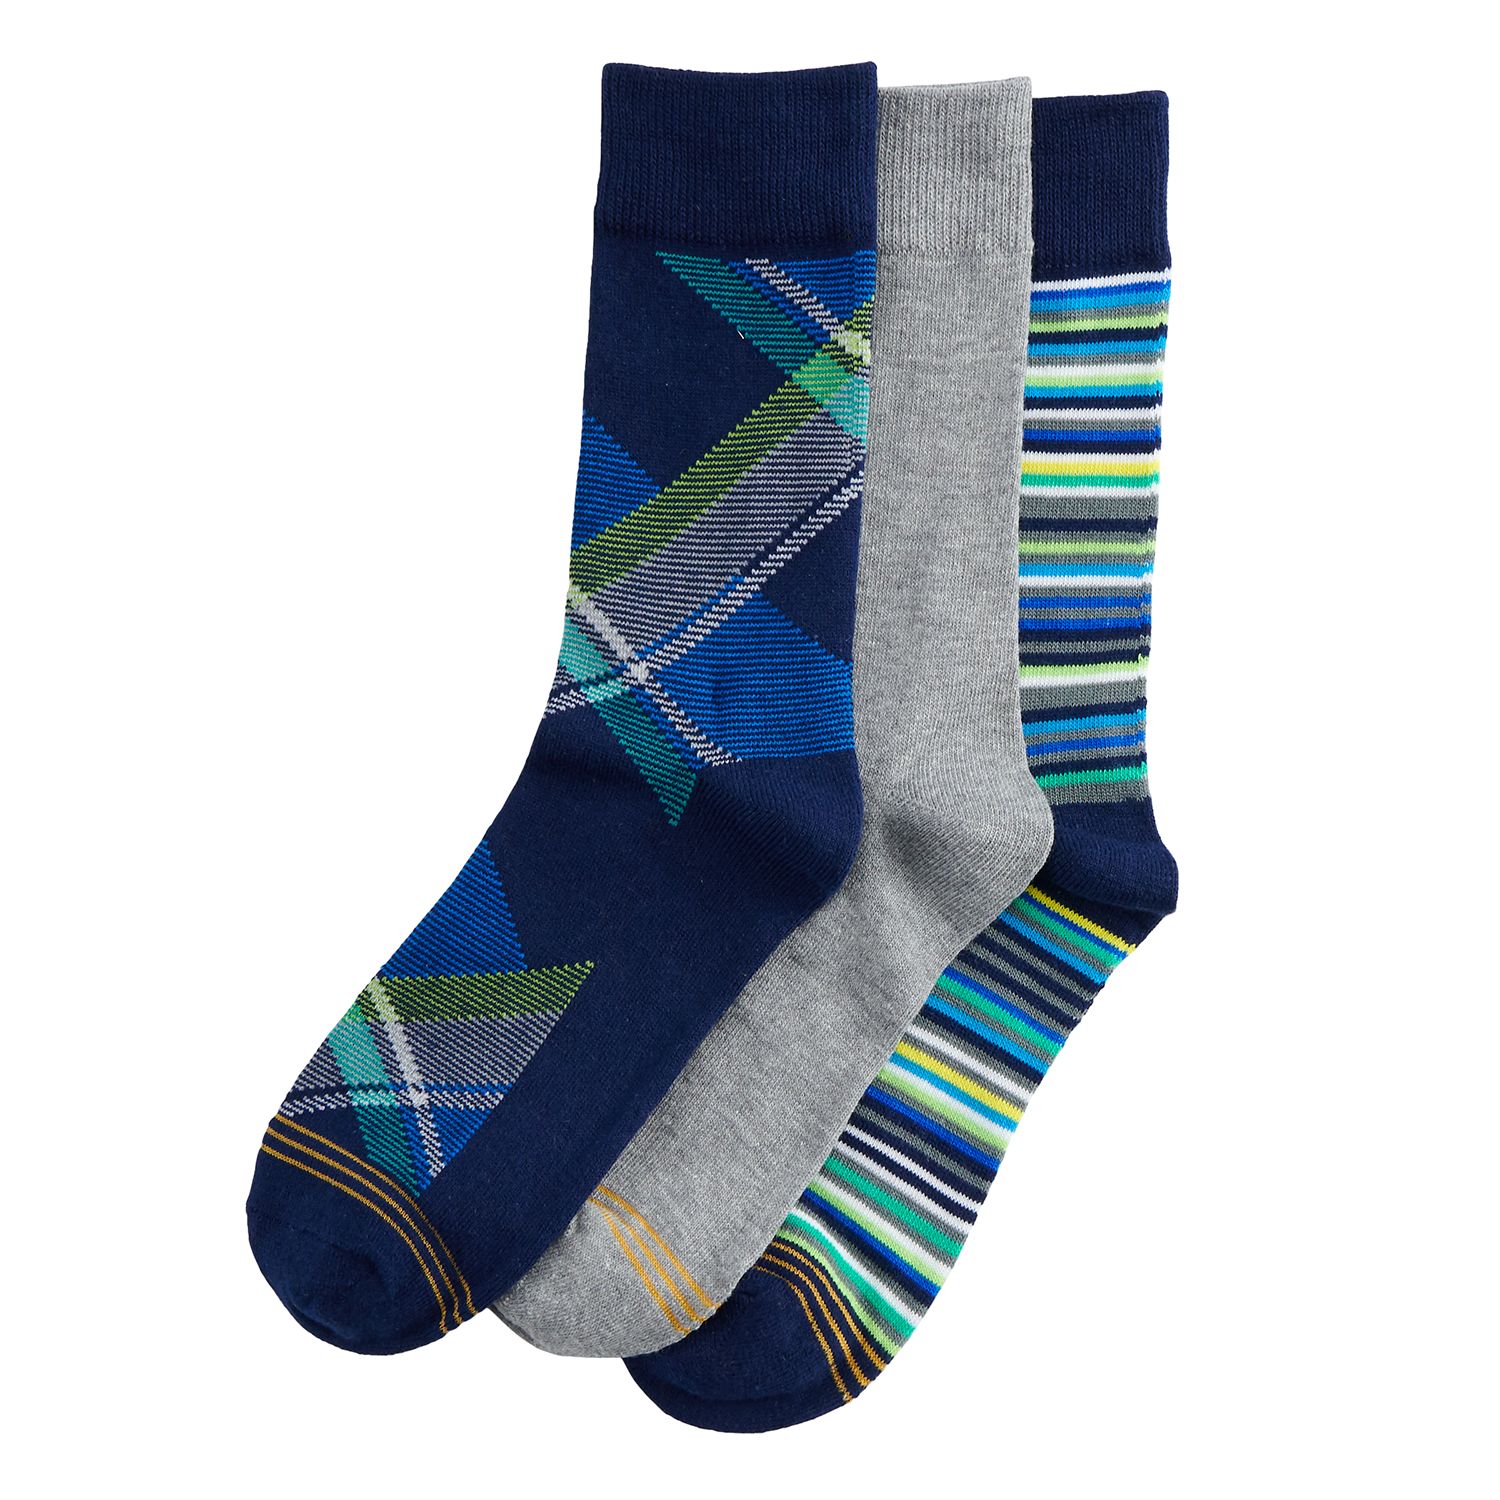 plaid socks